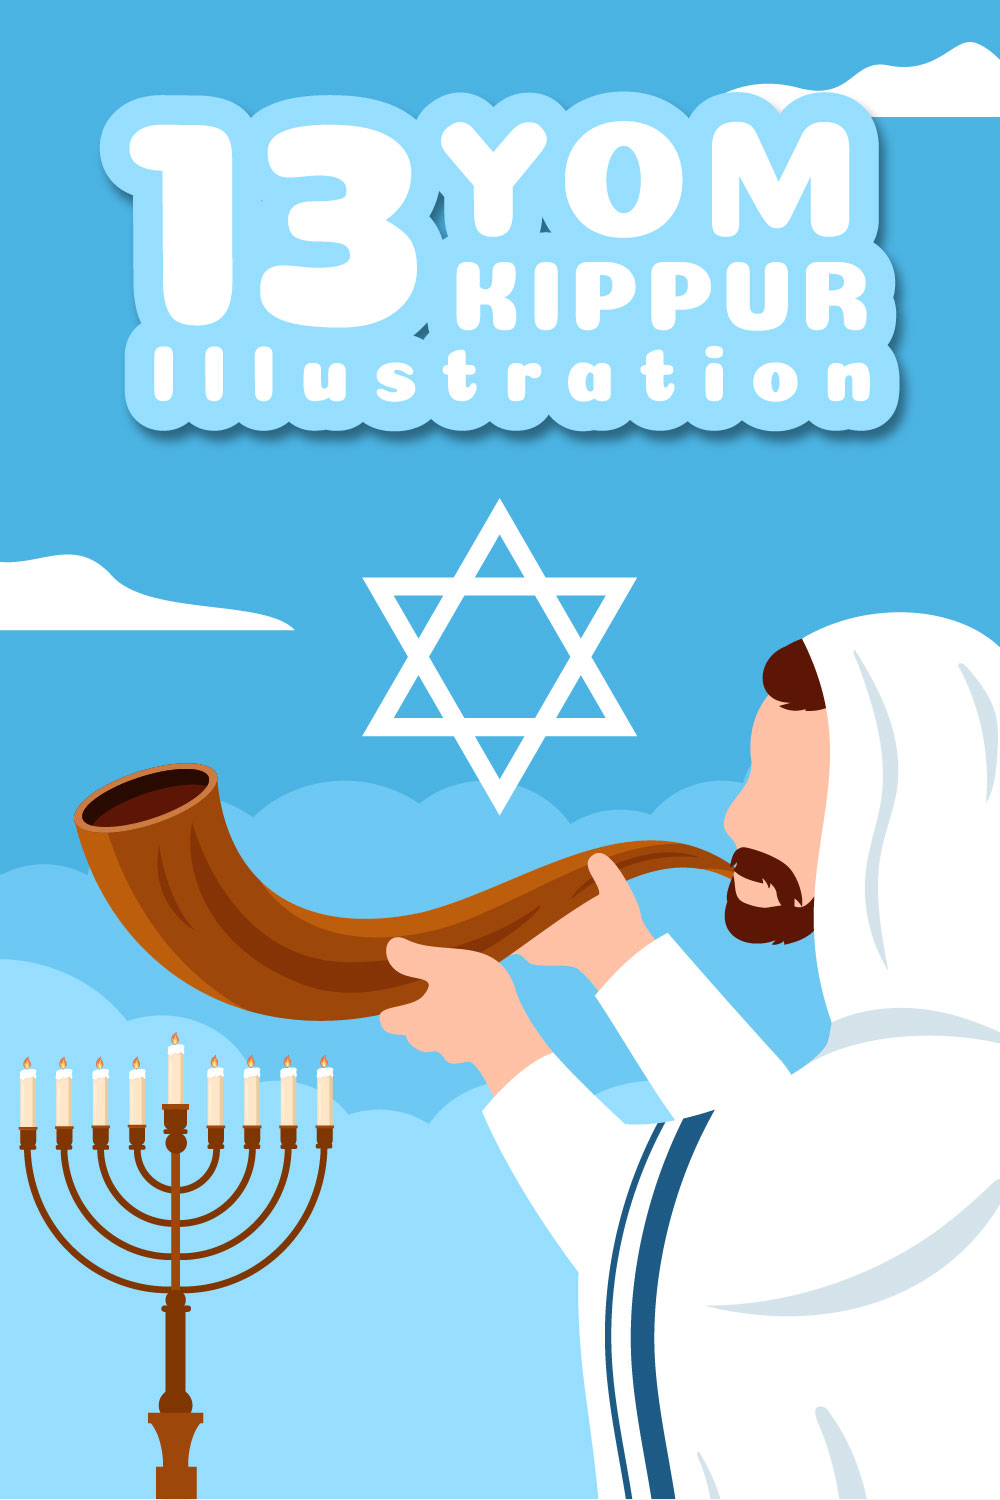 13 Yom Kippur Day Celebration Illustration Pinterest Image.